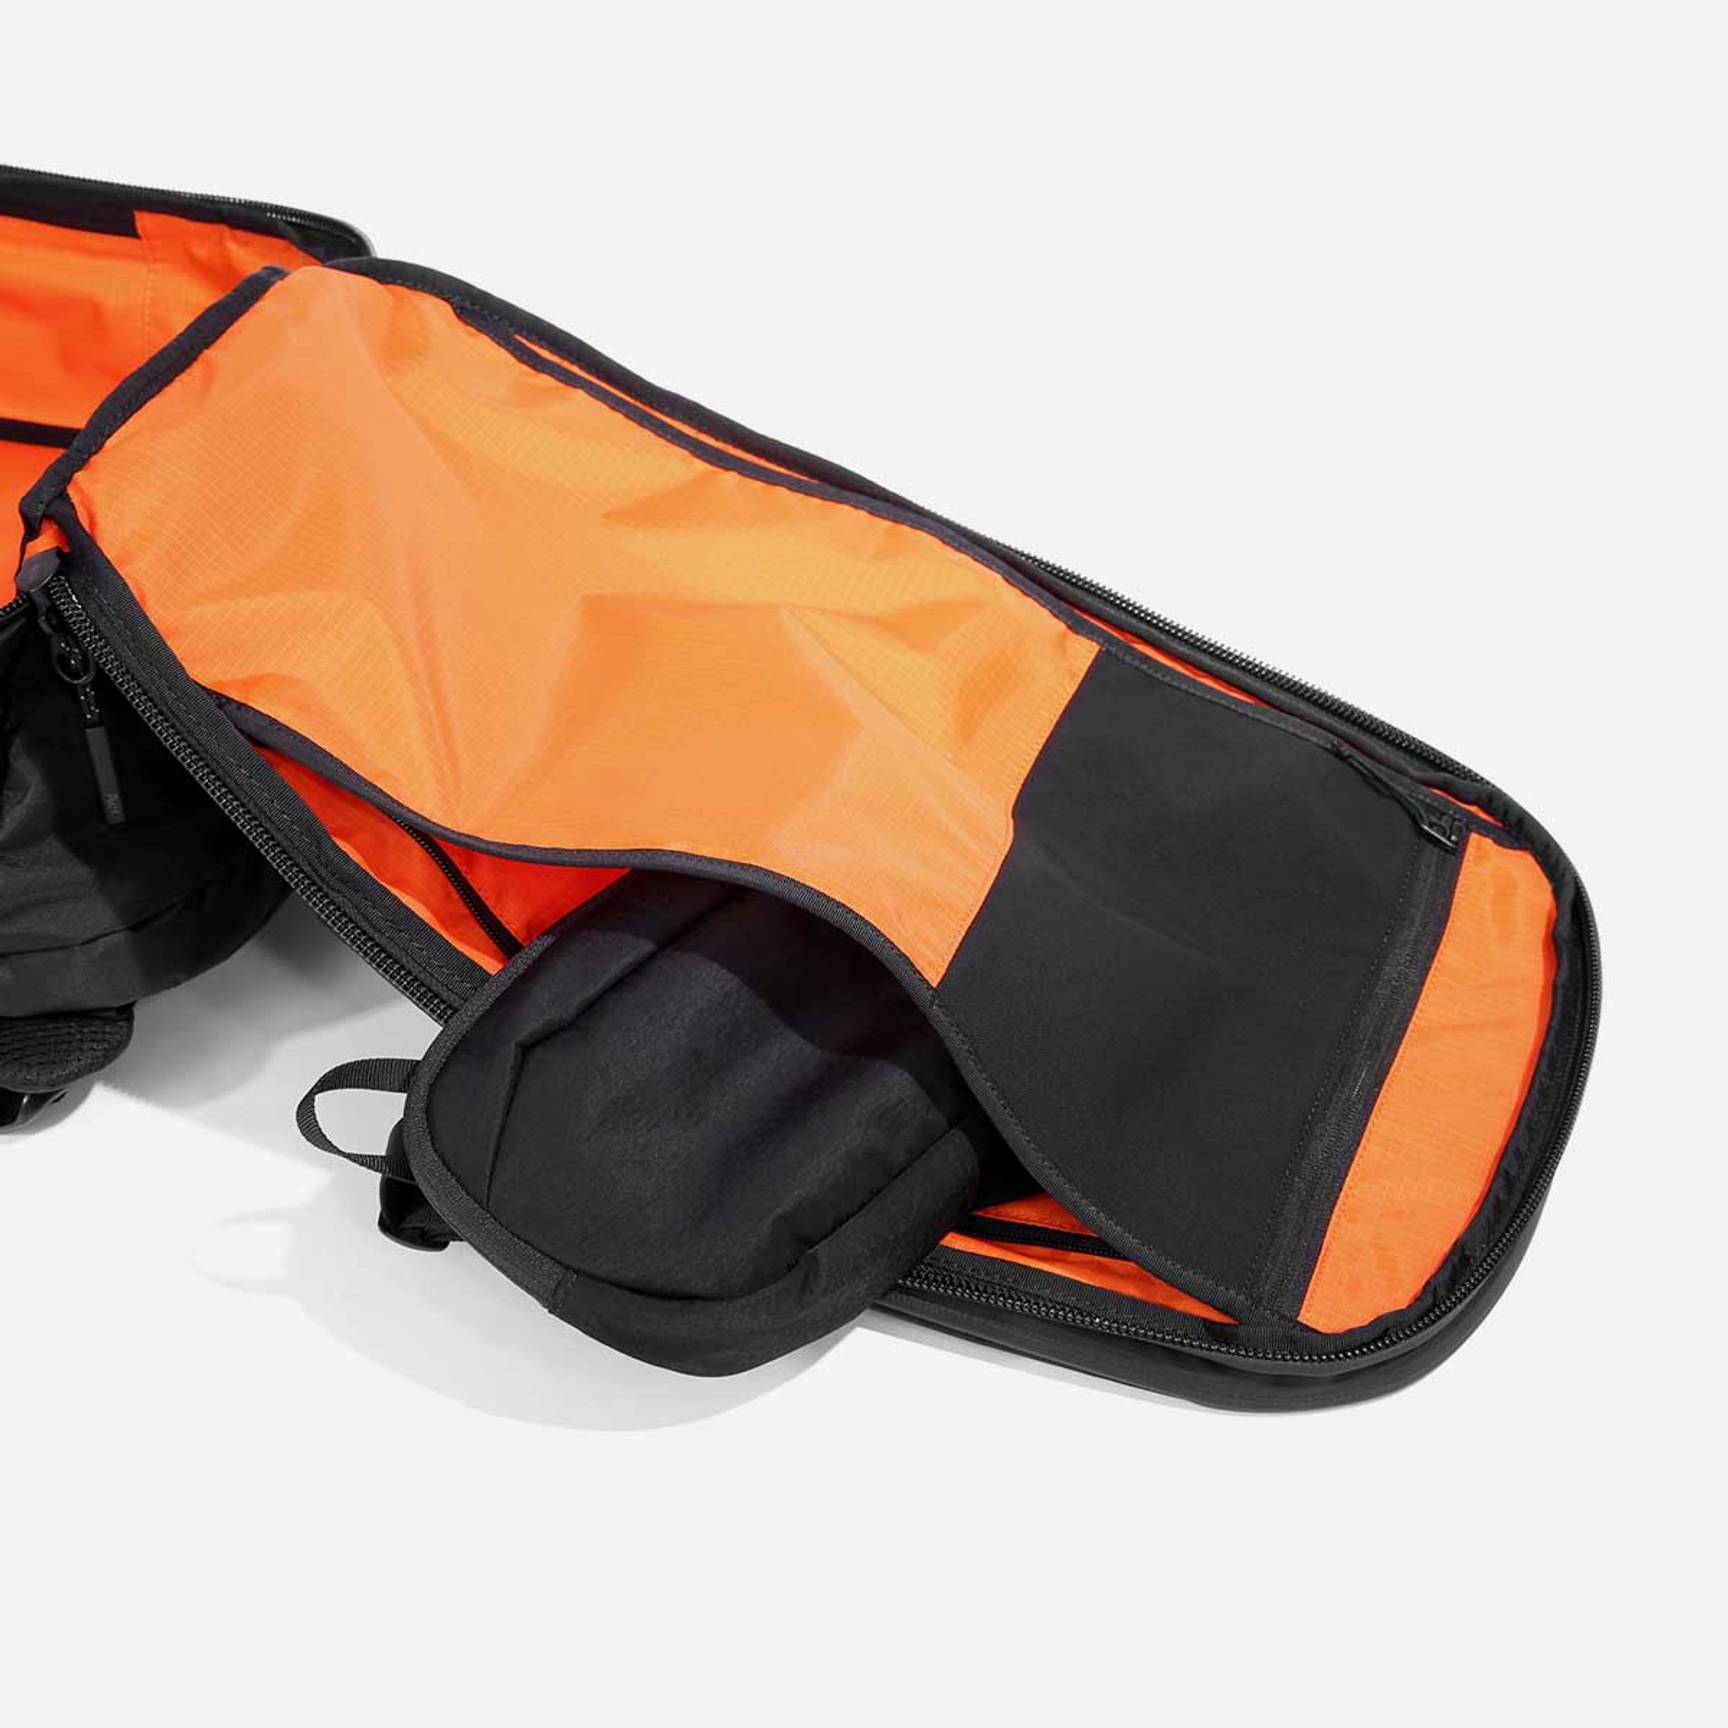 Sling Bags, Totes & Packables - Gearshop NZ